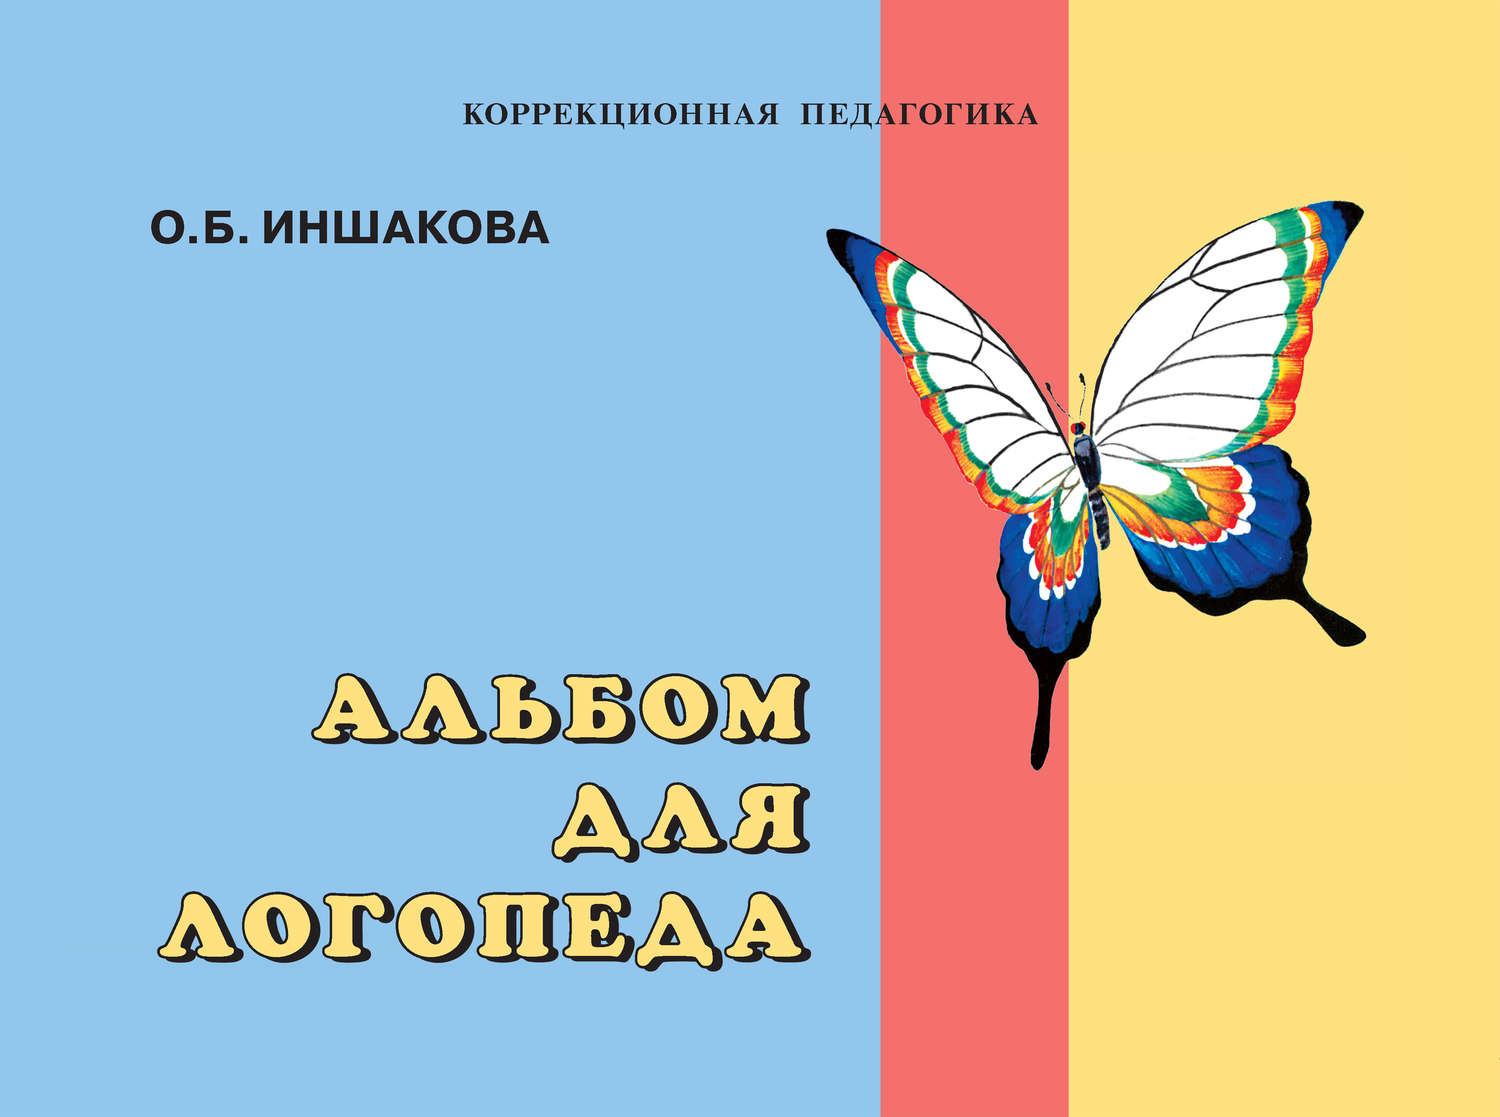 Альбом логопеда обследование речи Иншакова